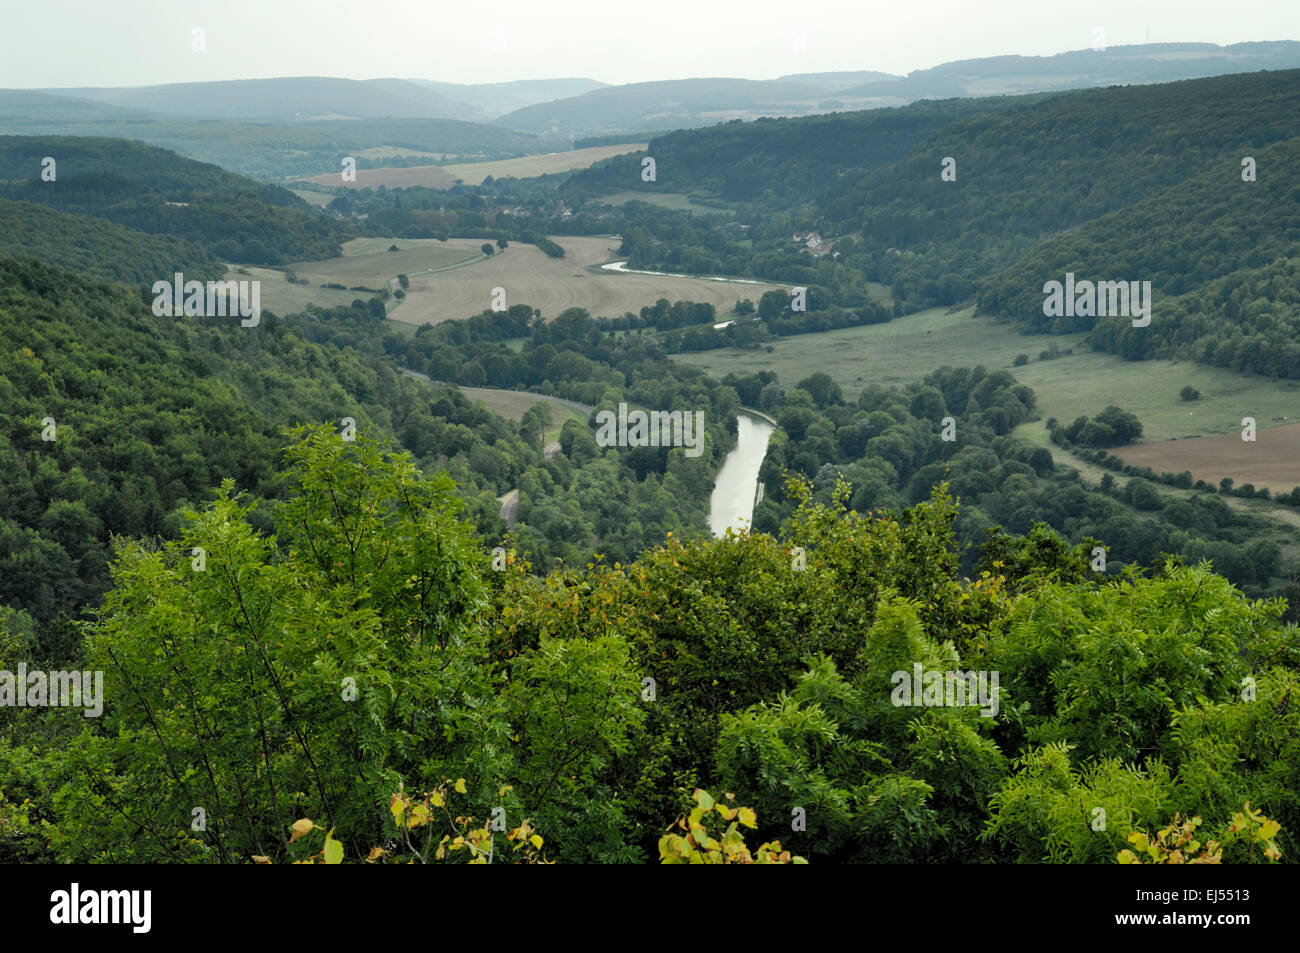 View of Vallée de l'Ouche from St.-Jean-de-Boeuf Stock Photo - Alamy